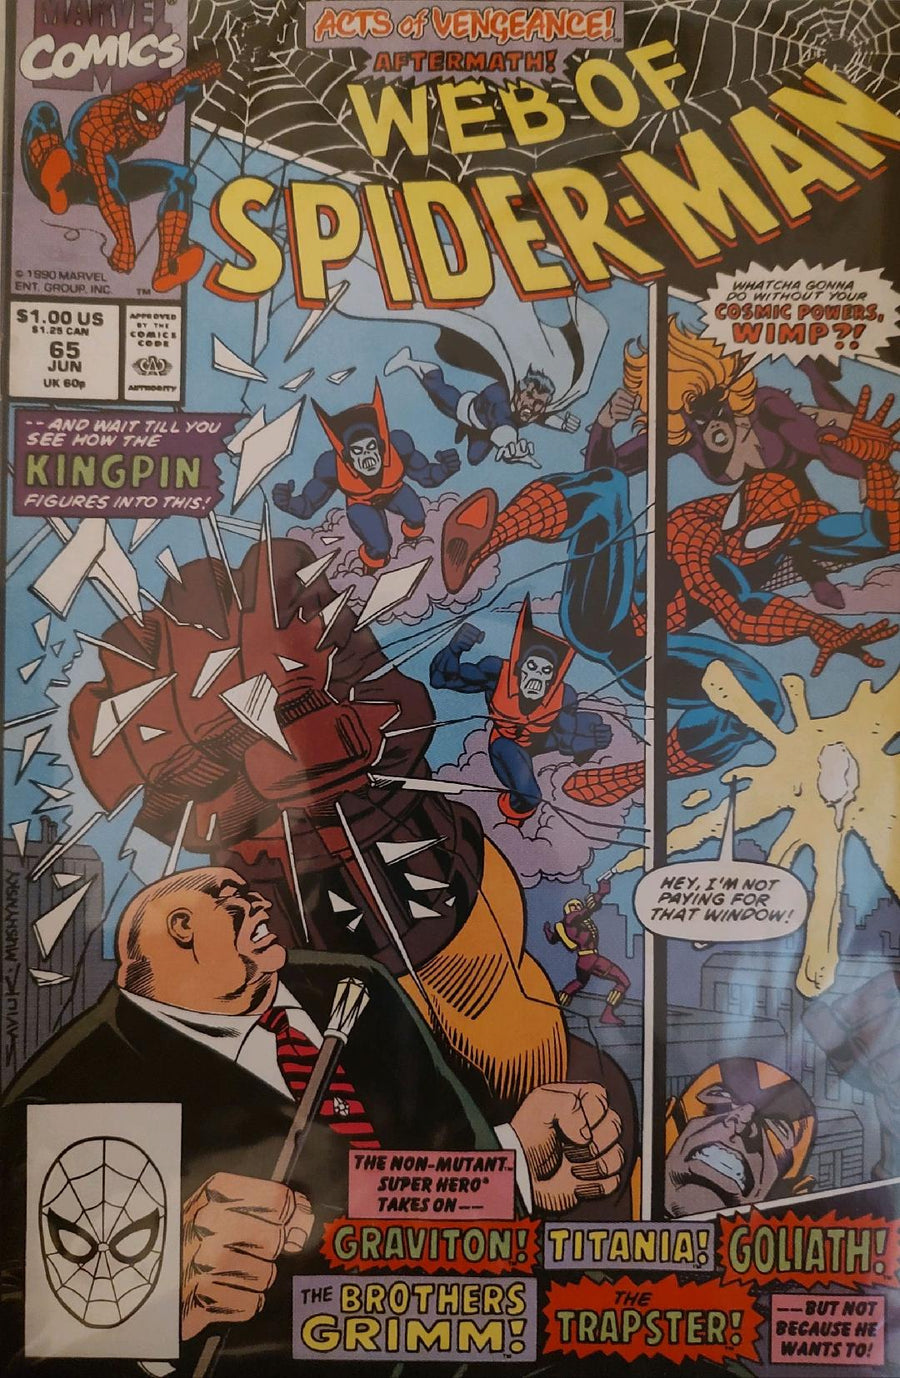 Web of Spiderman #65 Comic Book Cover